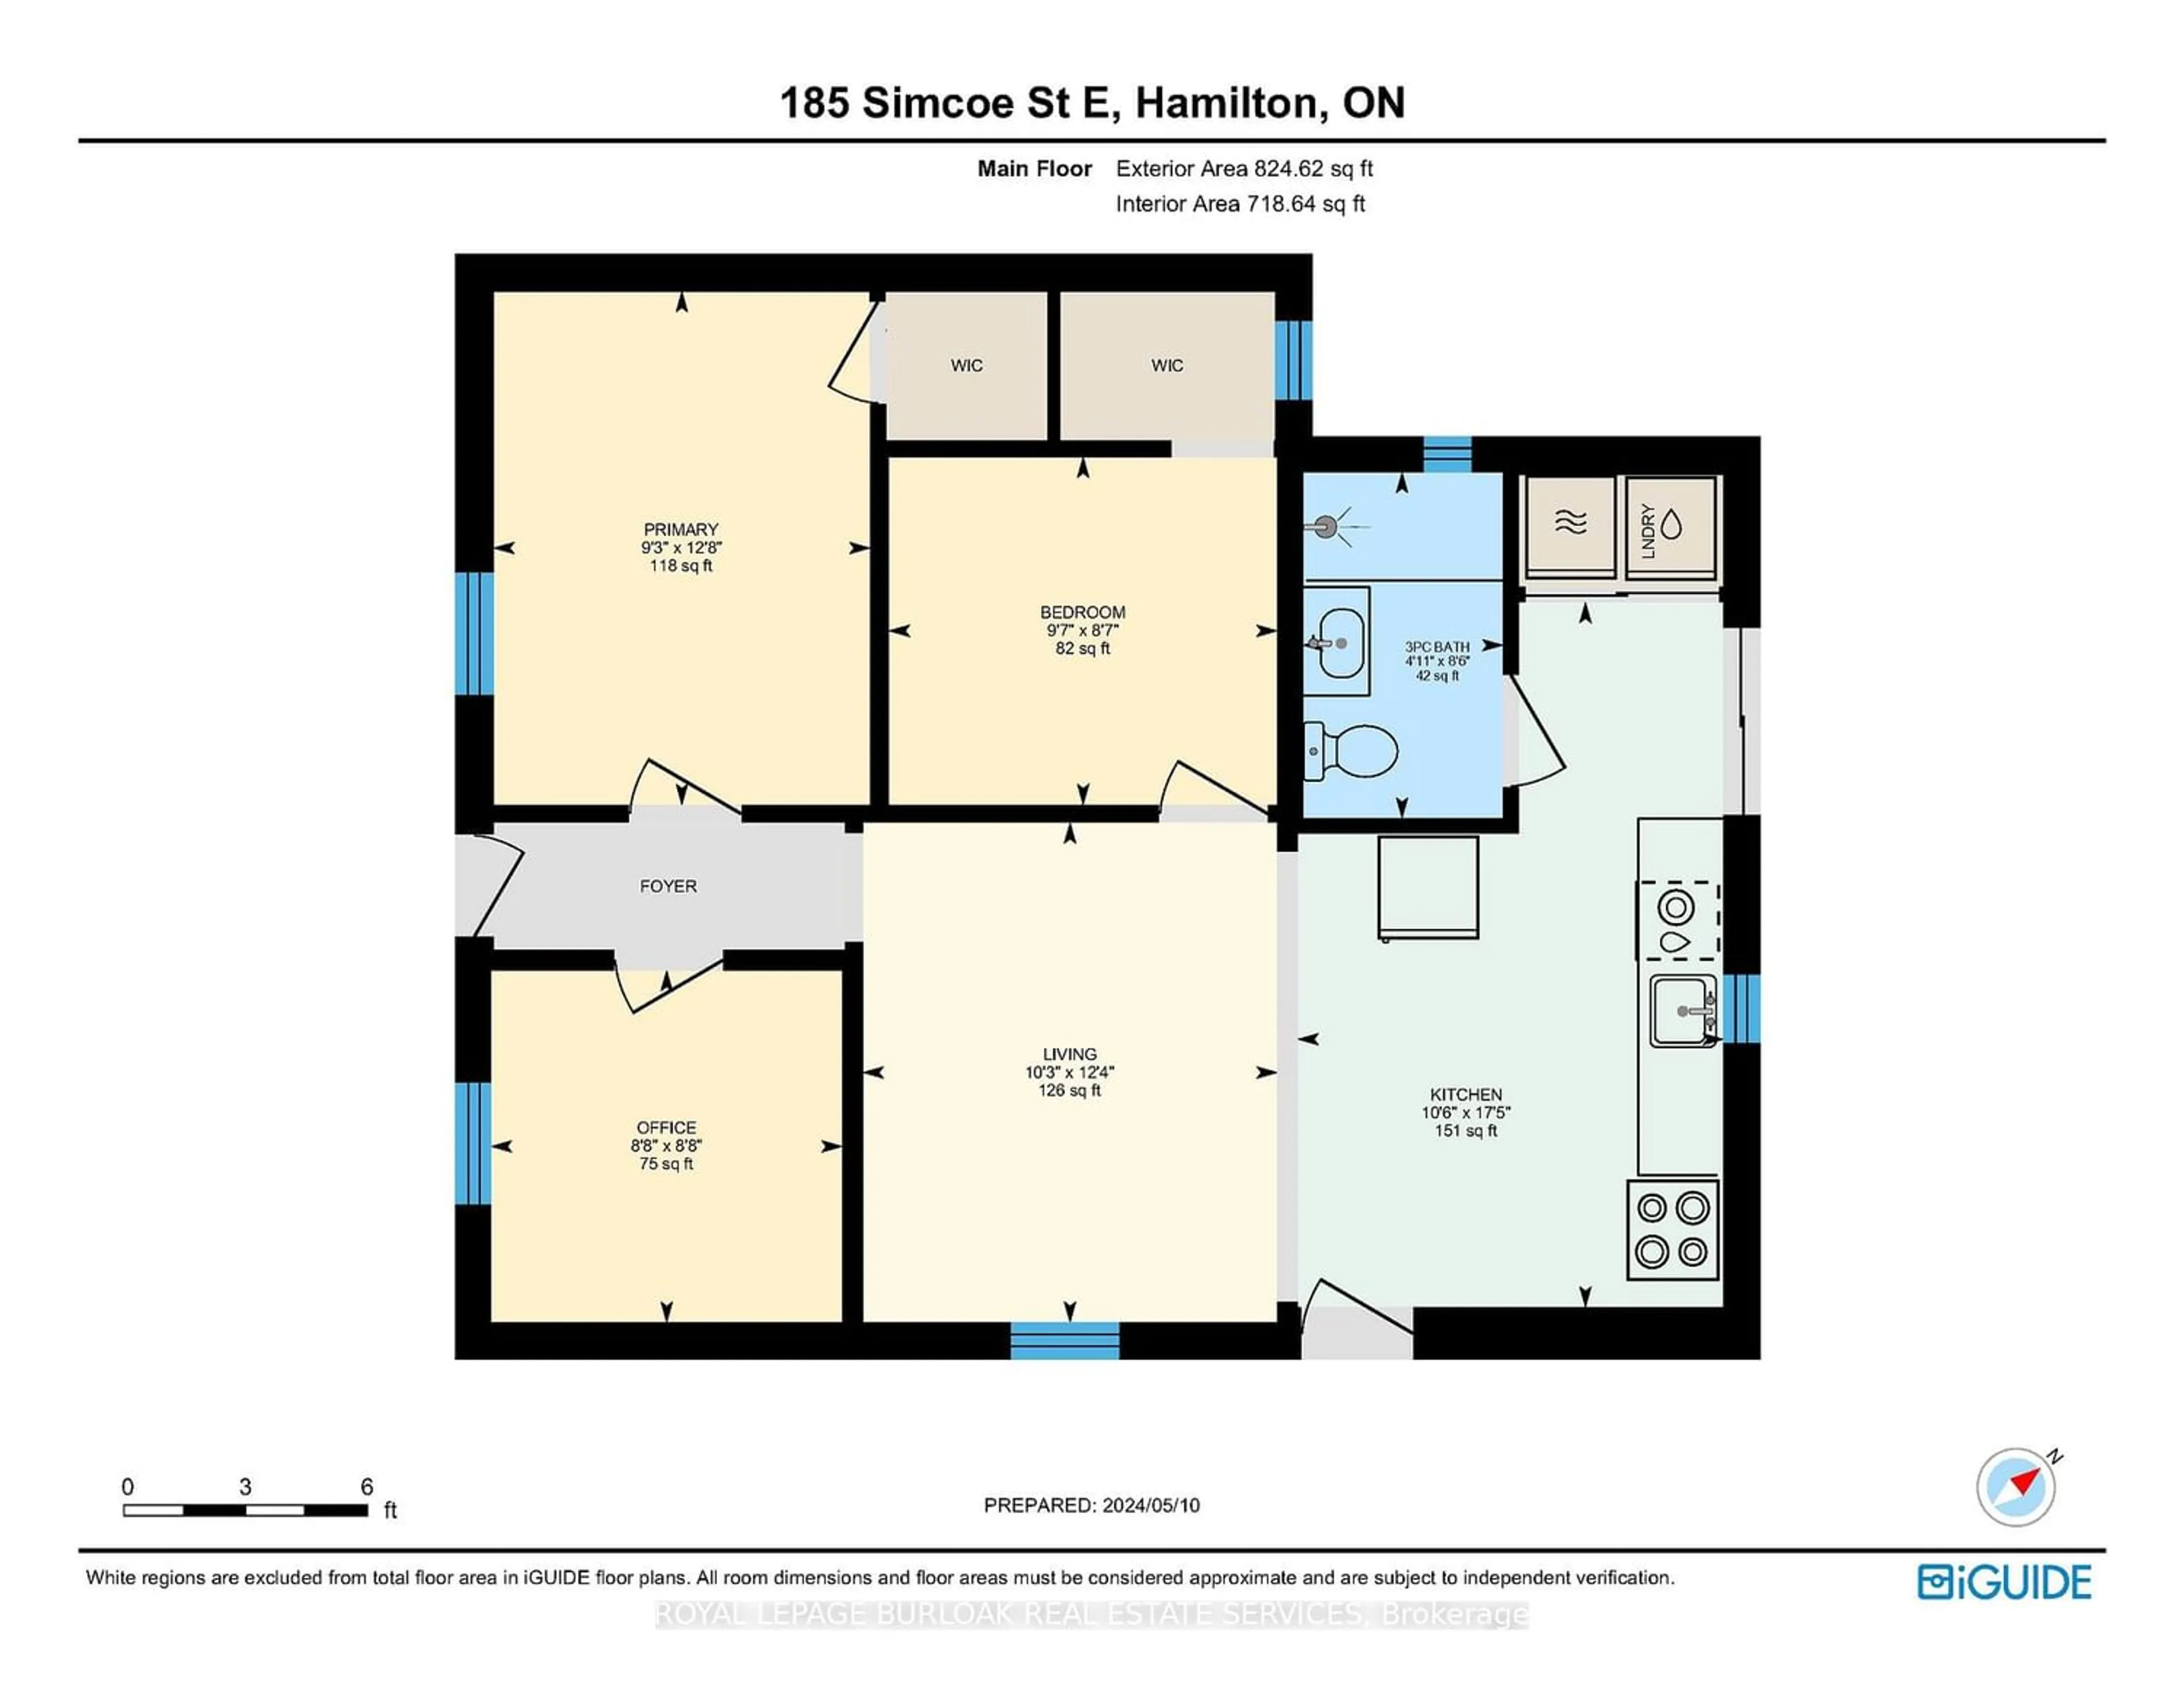 Floor plan for 185 Simcoe St, Hamilton Ontario L8L 3N9